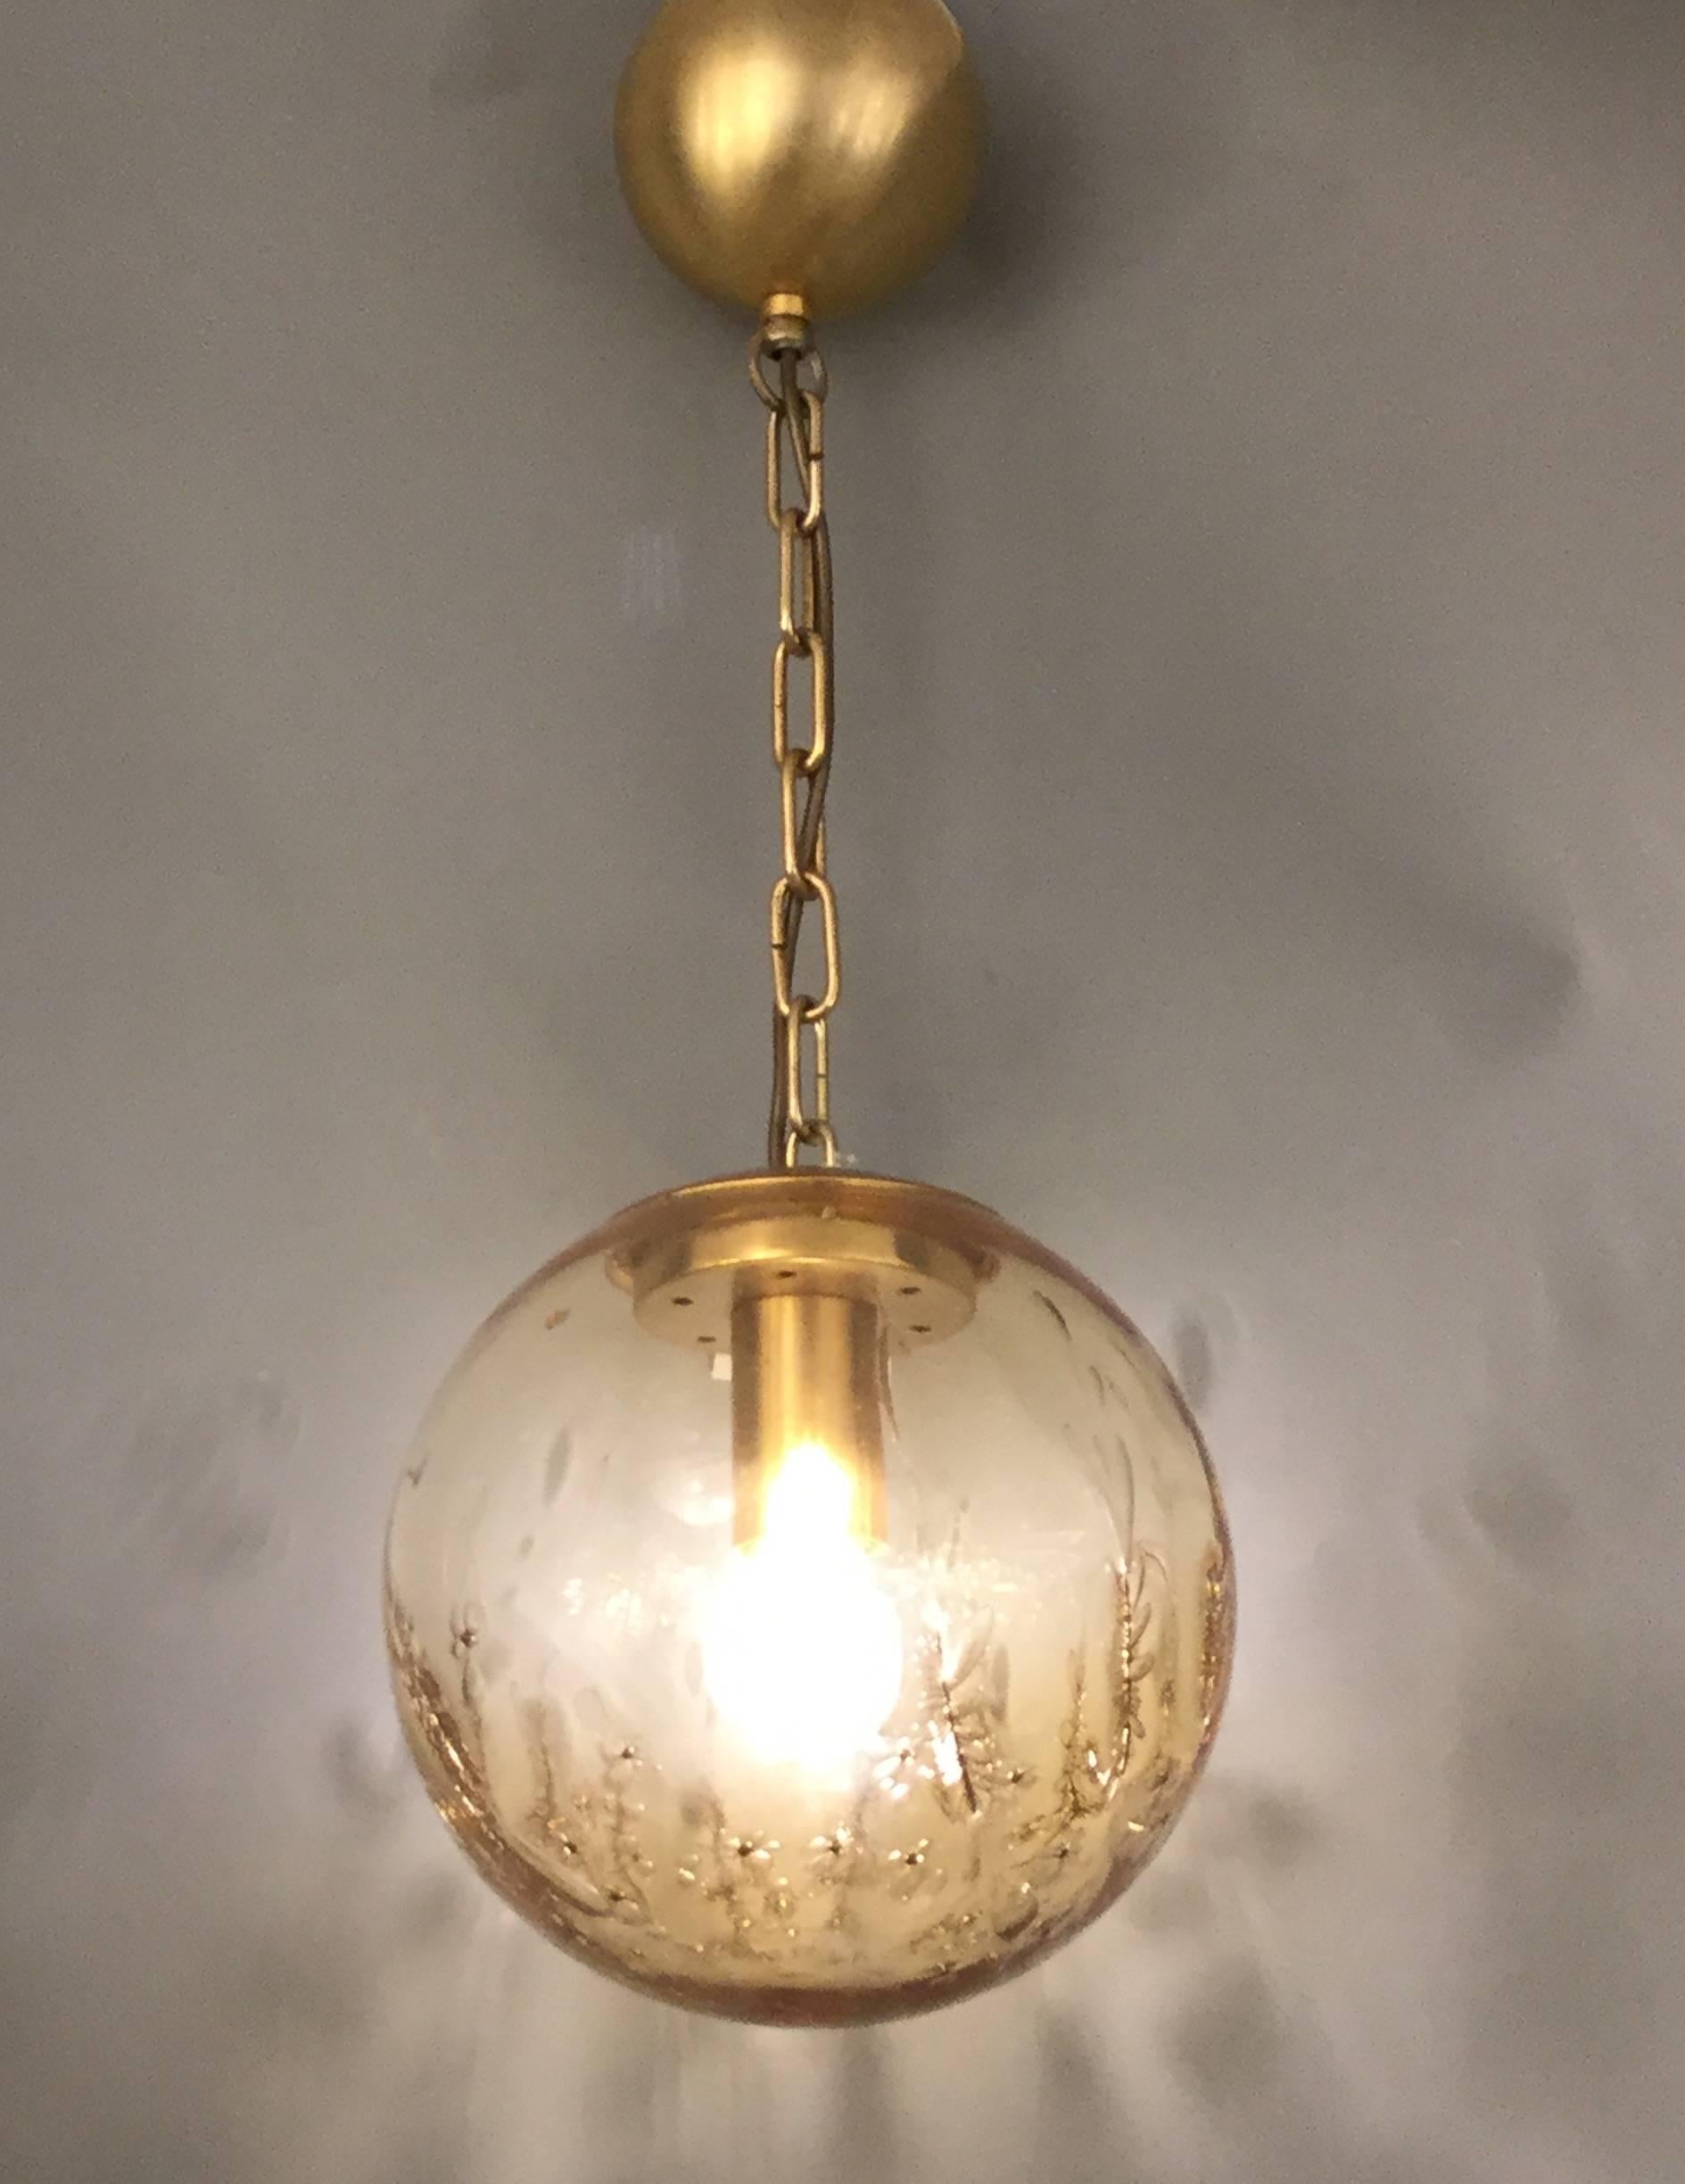 An Italian designed spherical Murano glass pendant with brass hardware signed by La Murrina.